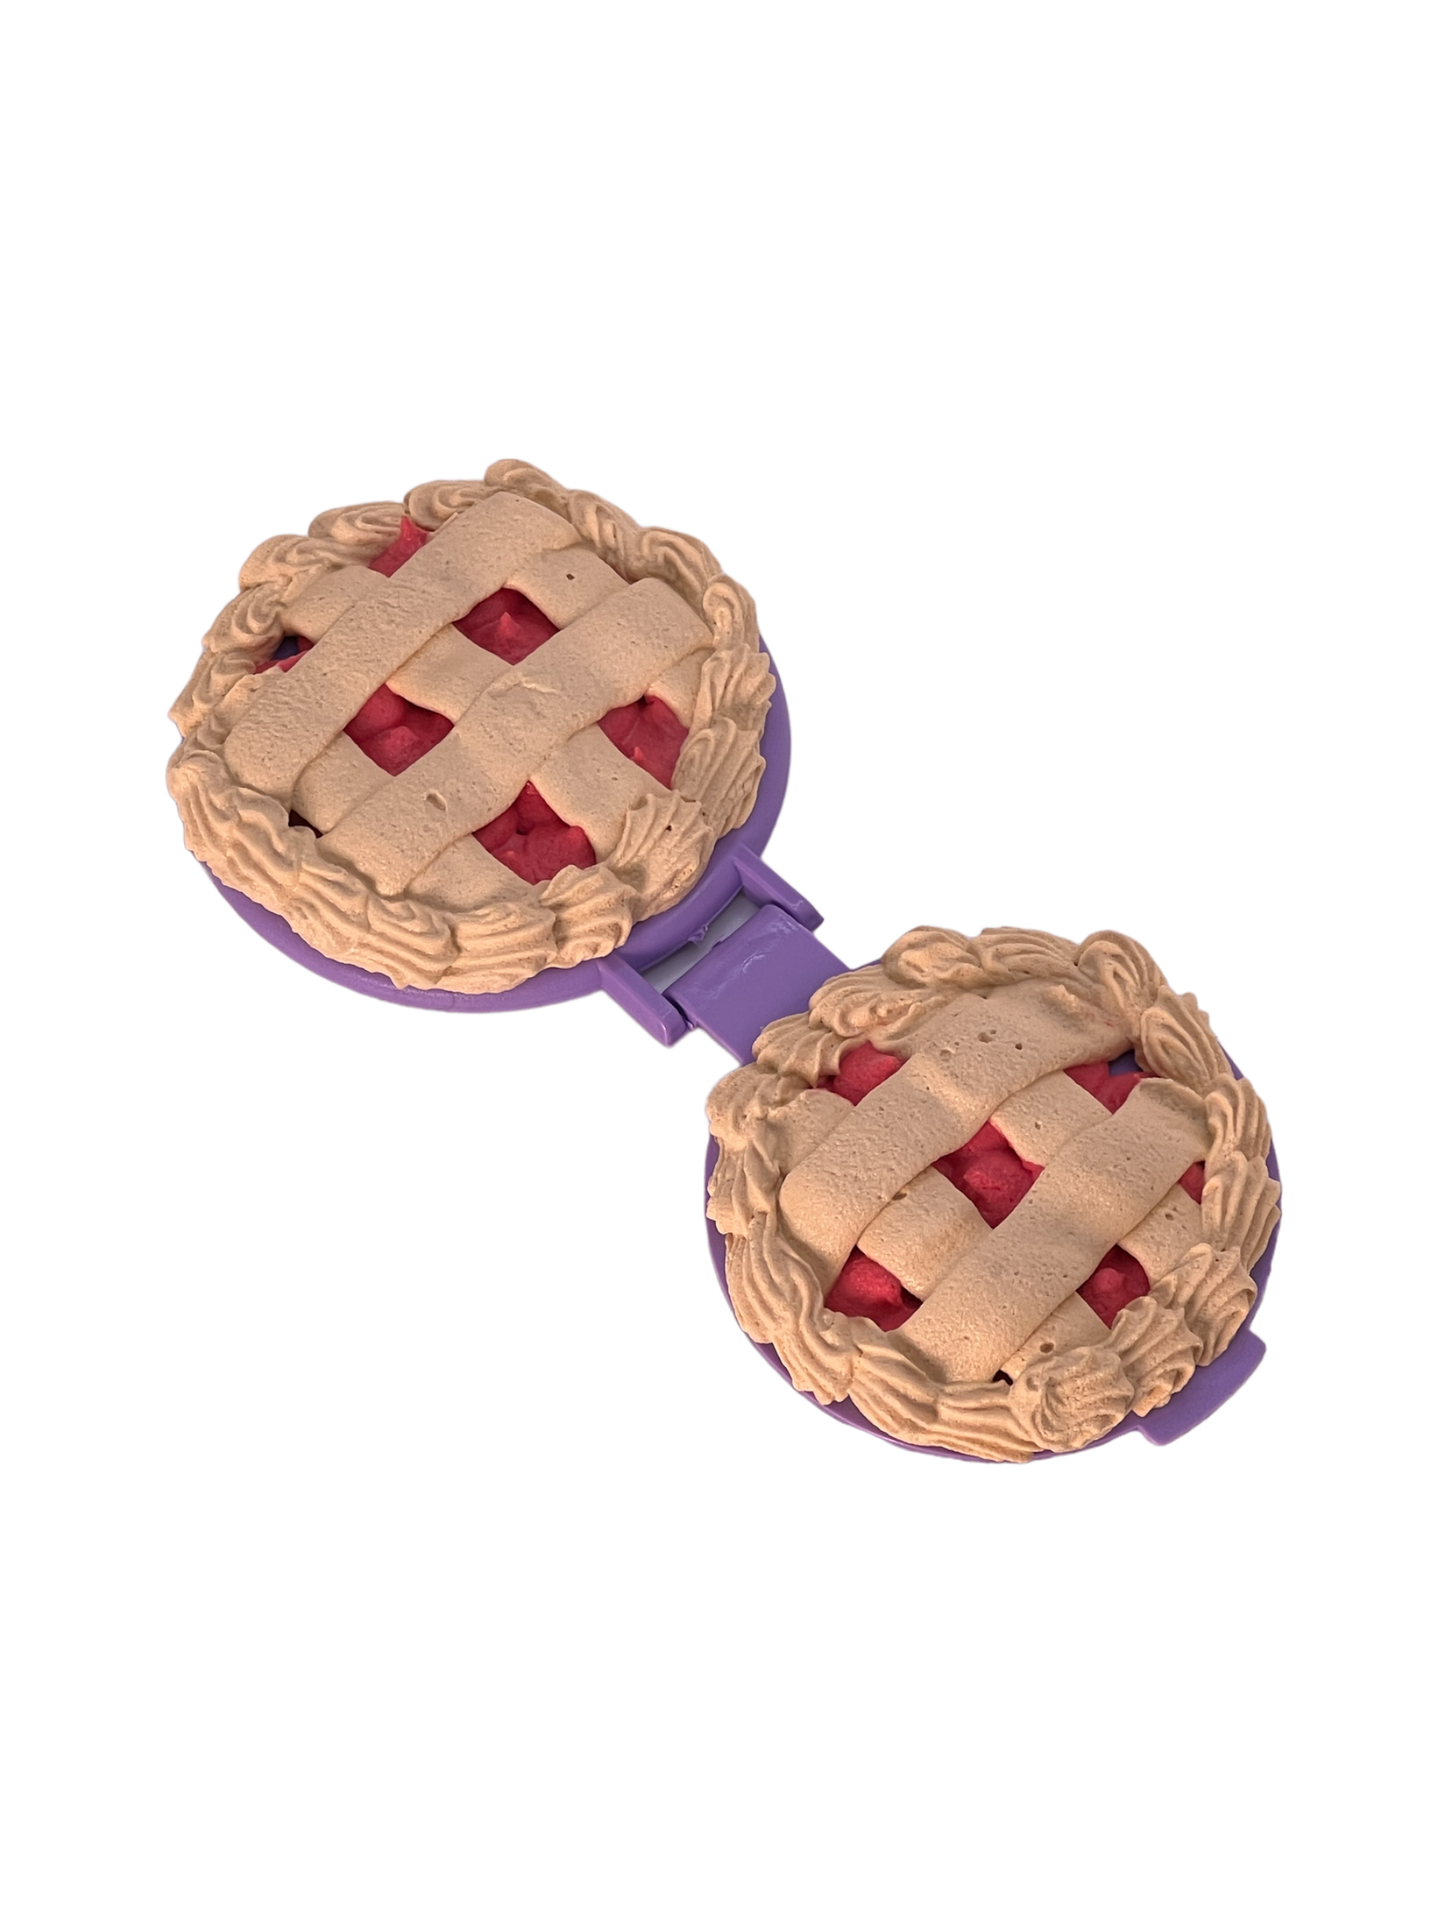 Cherry Pie Compact Mirror Lavender